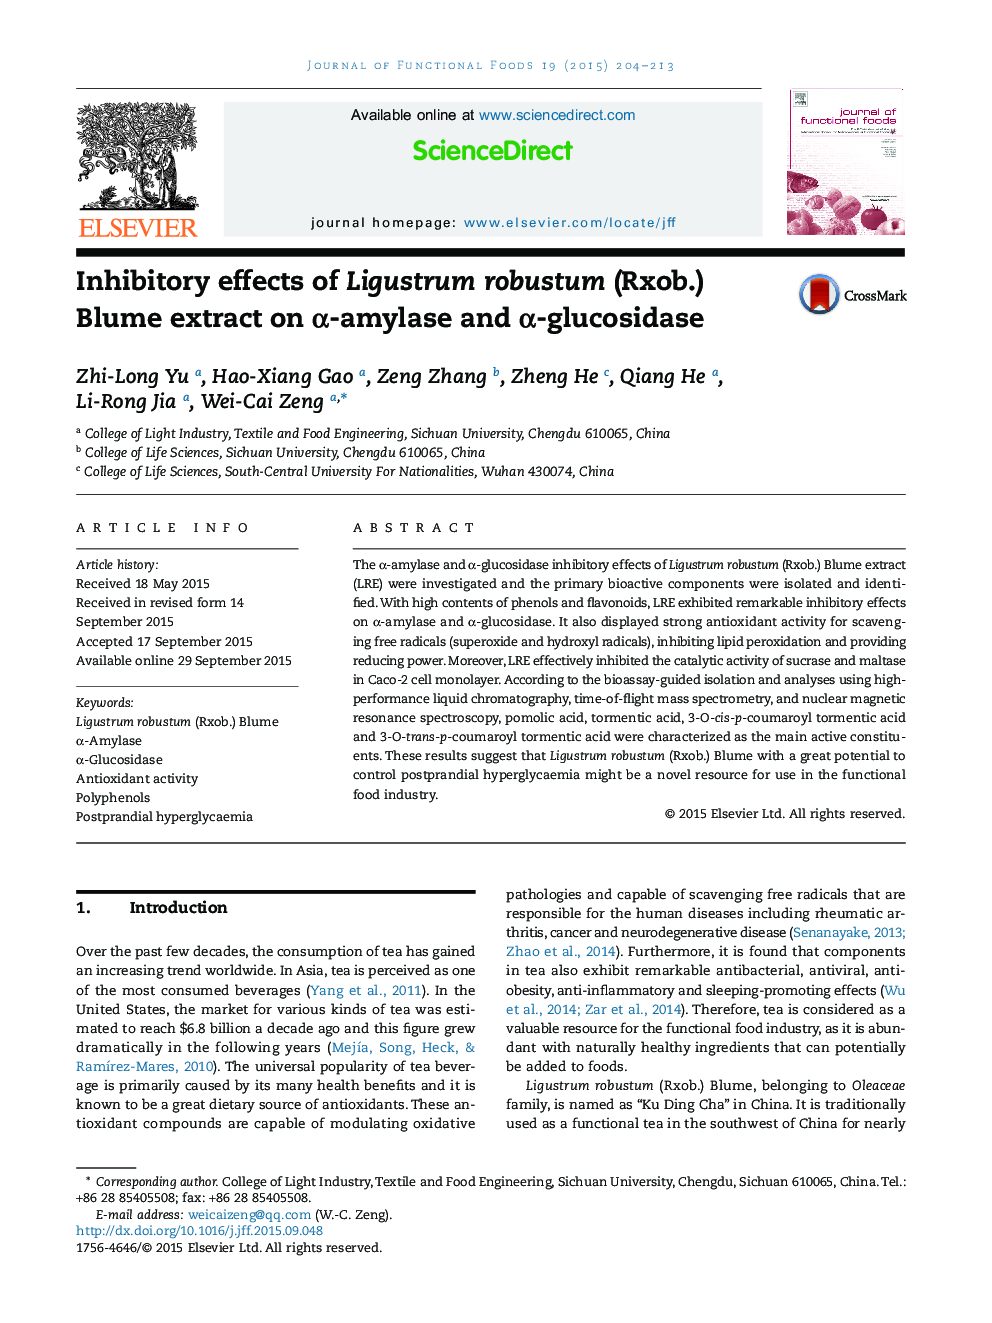 Inhibitory effects of Ligustrum robustum (Rxob.) Blume extract on α-amylase and α-glucosidase